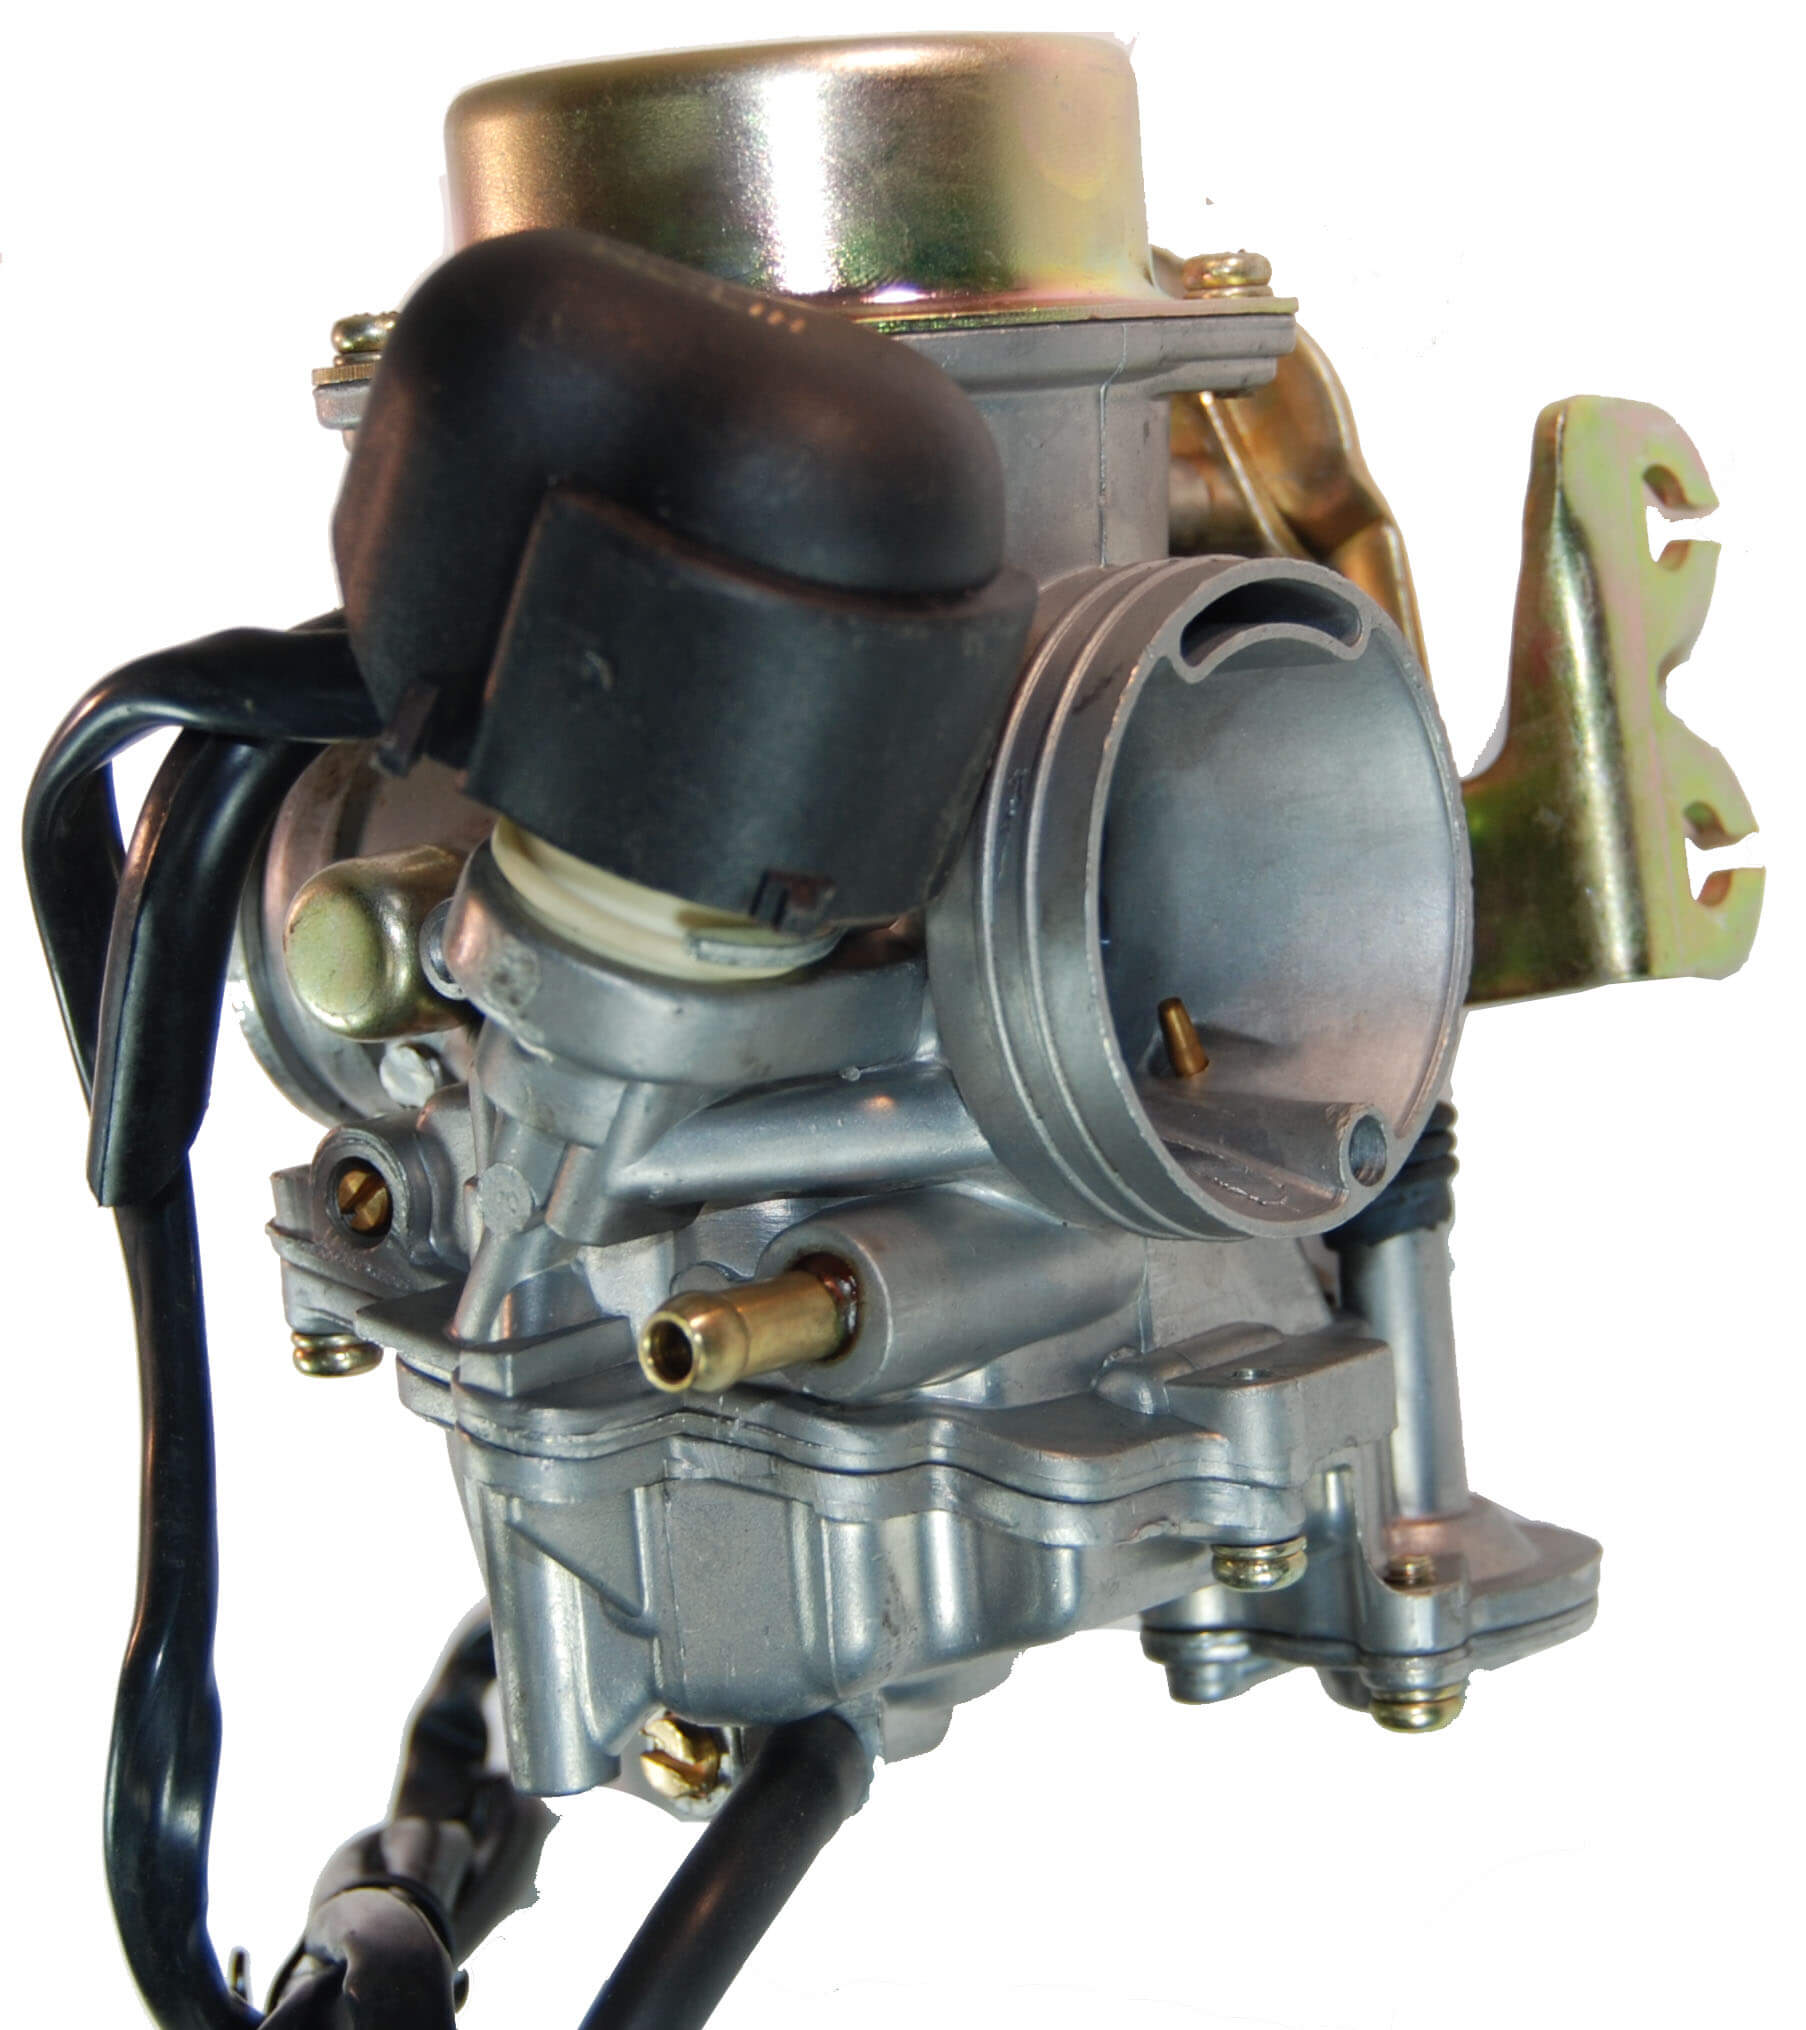 PD31 Carburetor 250-300cc With Pump and Electric Choke Intake ID=30mm Intake OD=36mm / Air Box OD=46mm